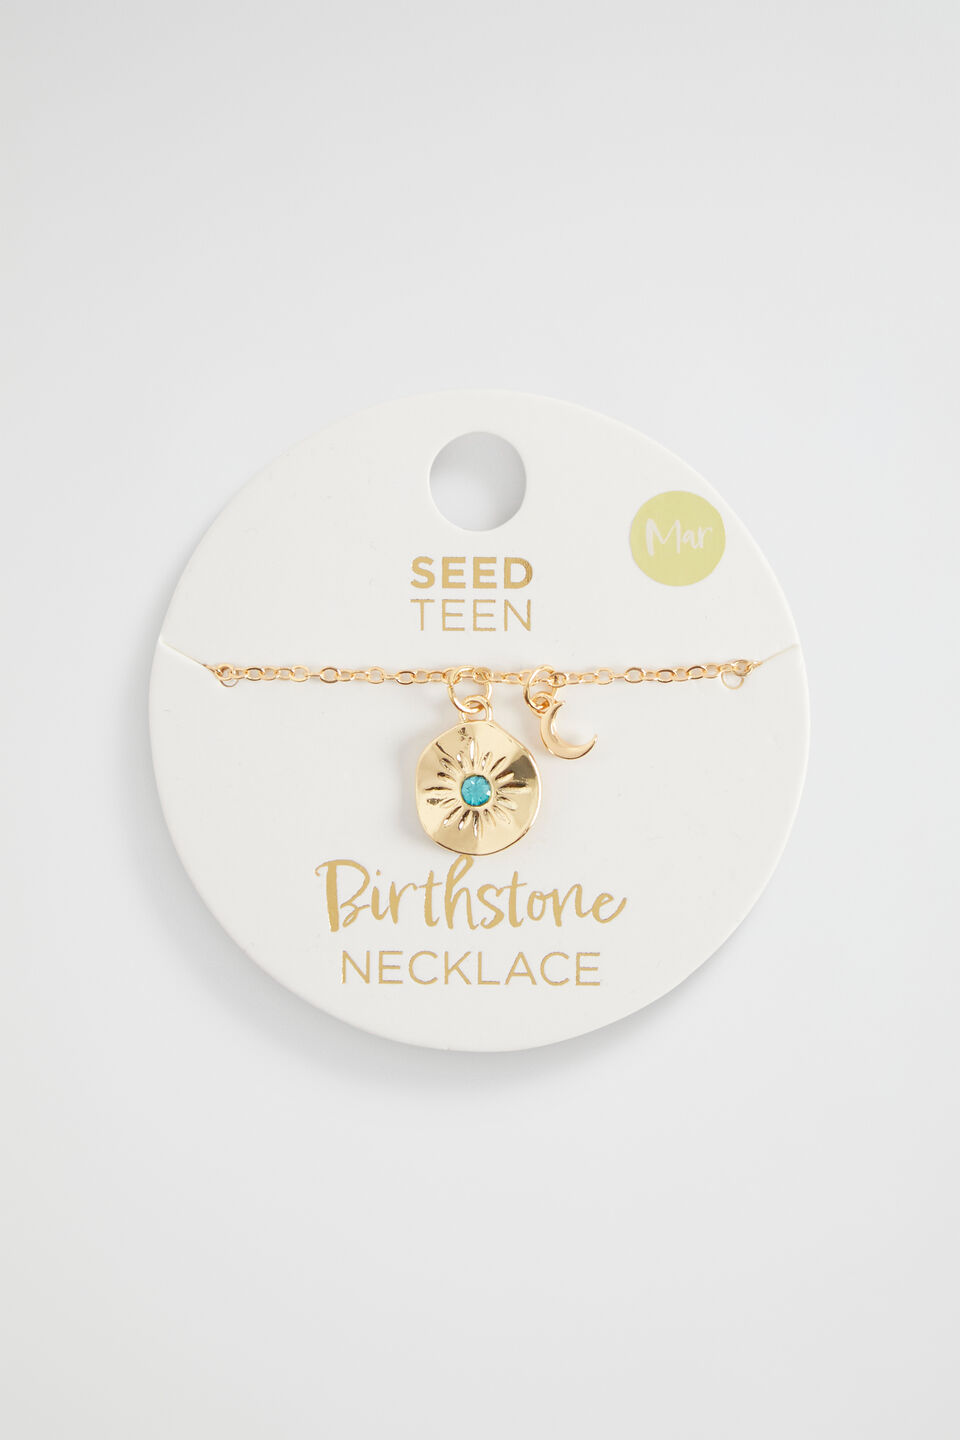 Birthstone Necklace  March